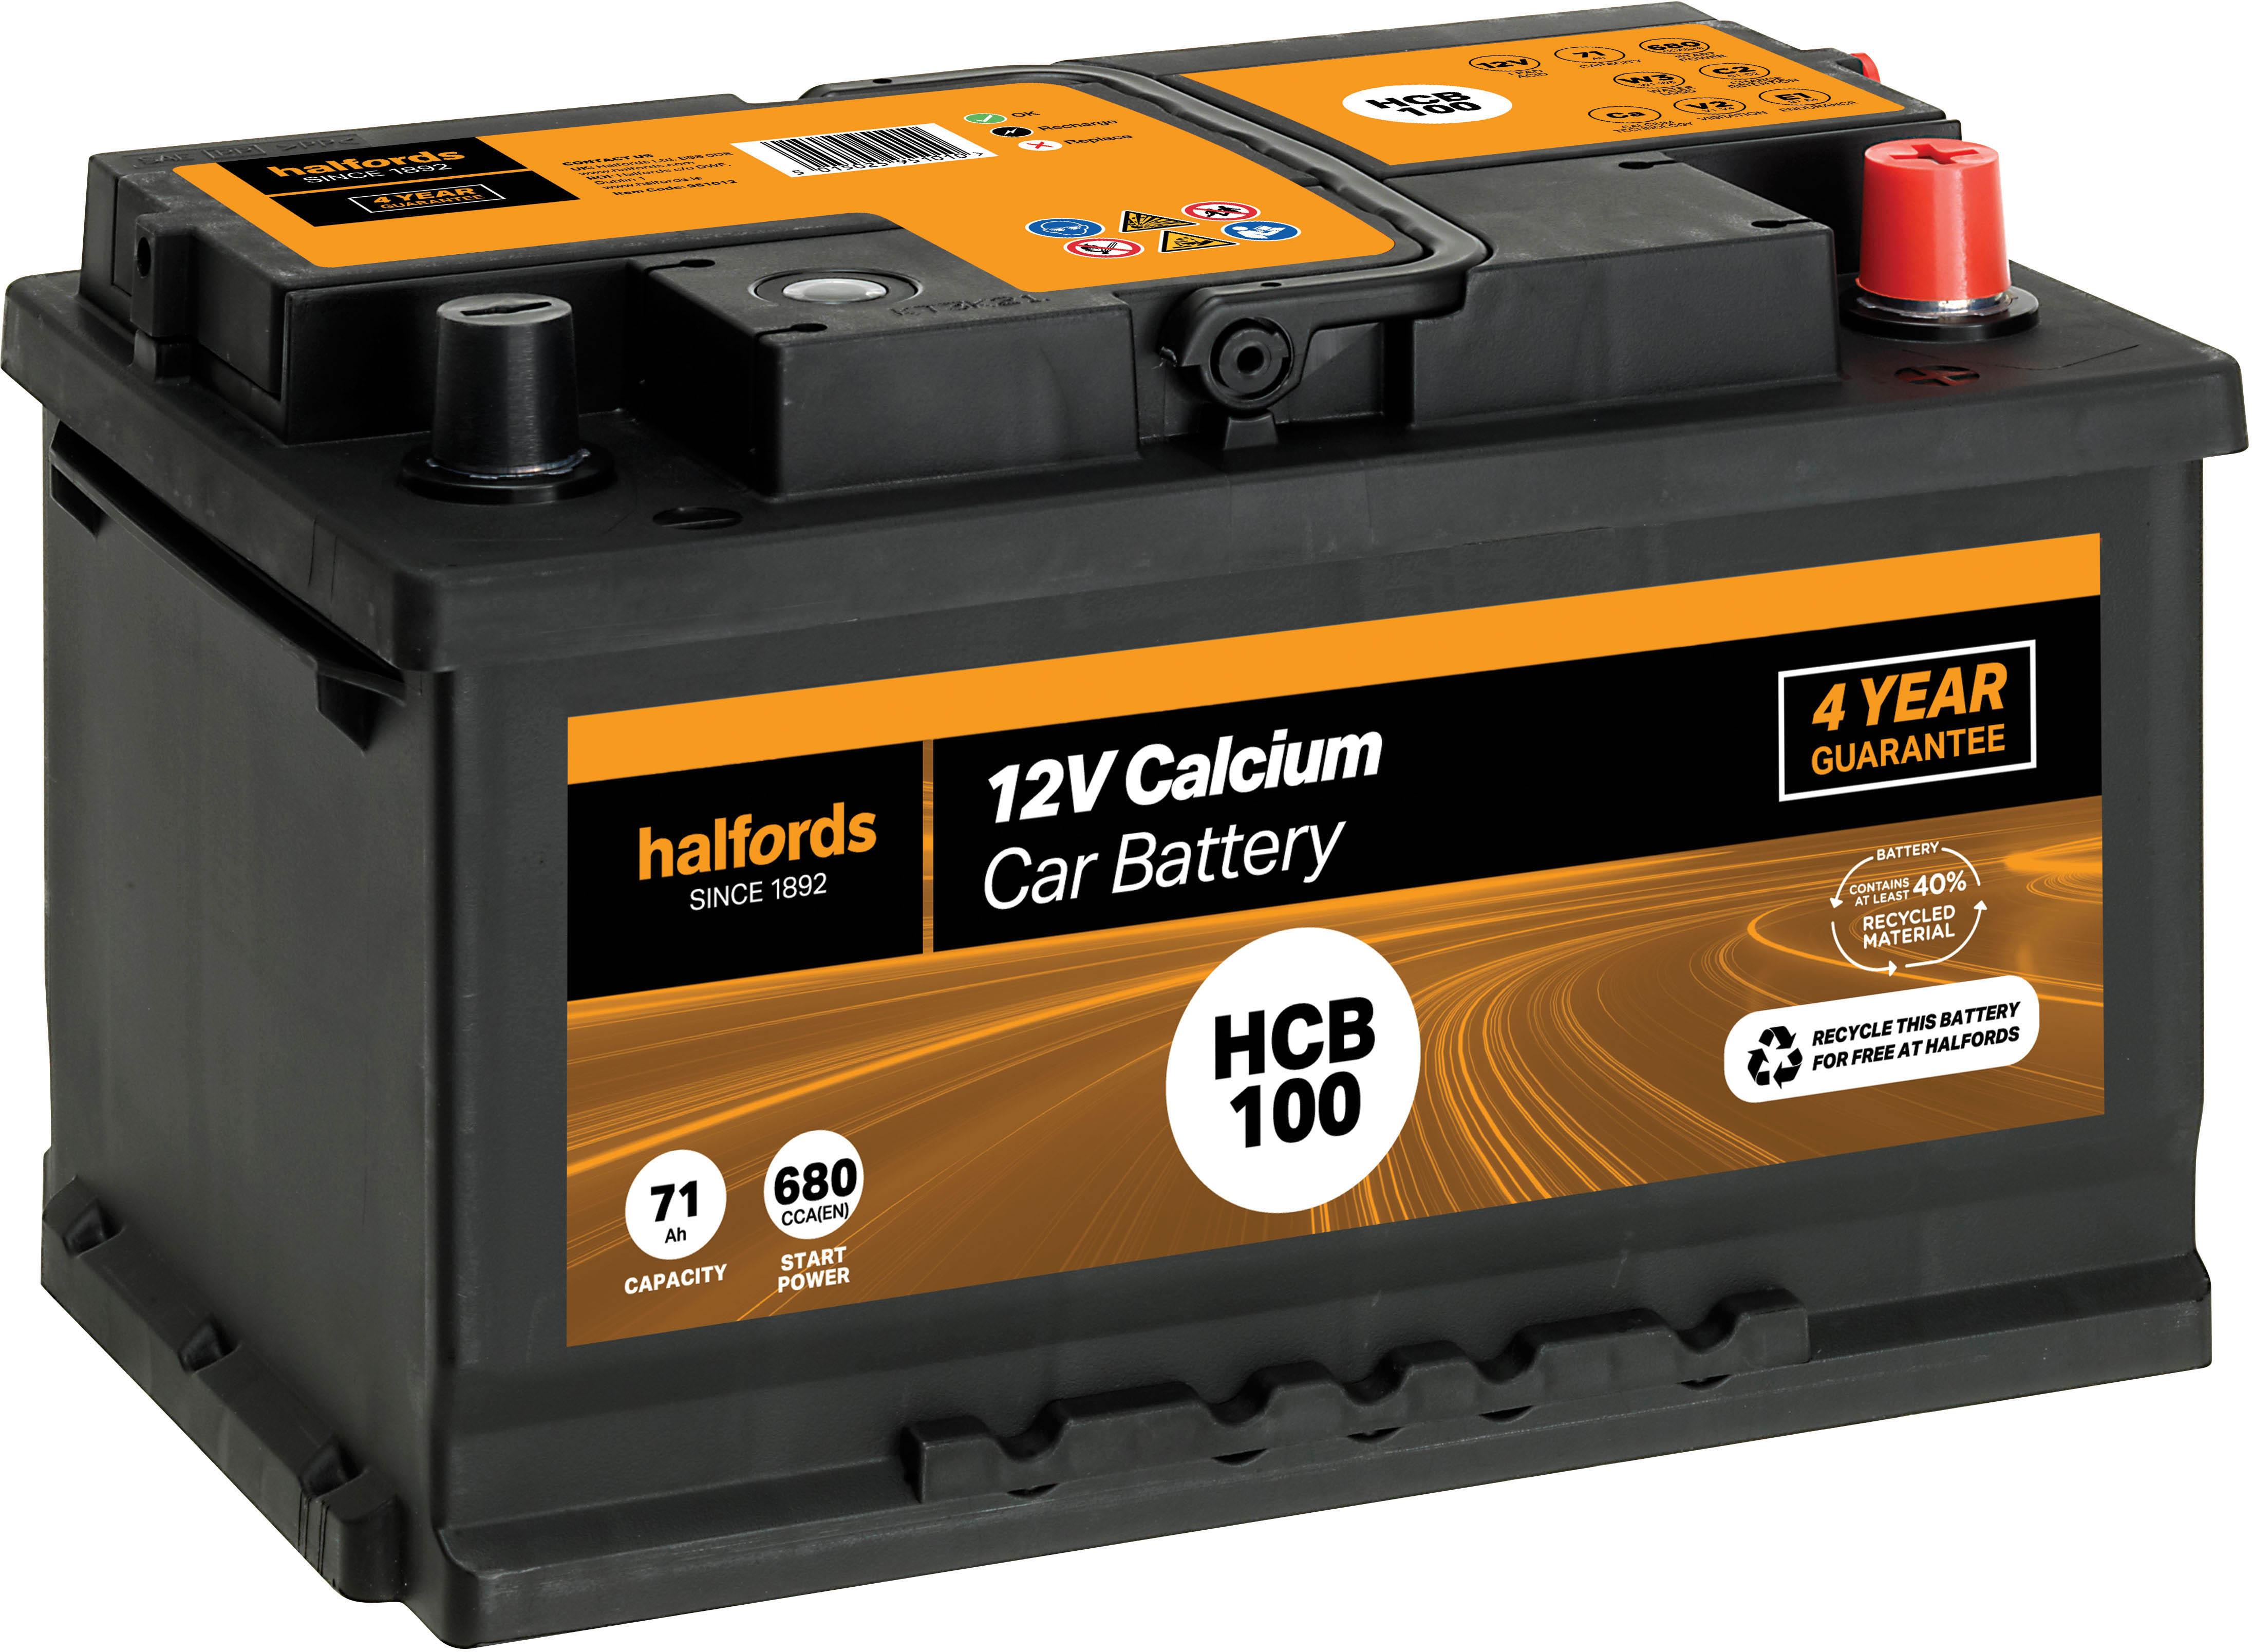 Halfords Hb010 Lead Acid 12V Car Battery 3 Year Guarantee